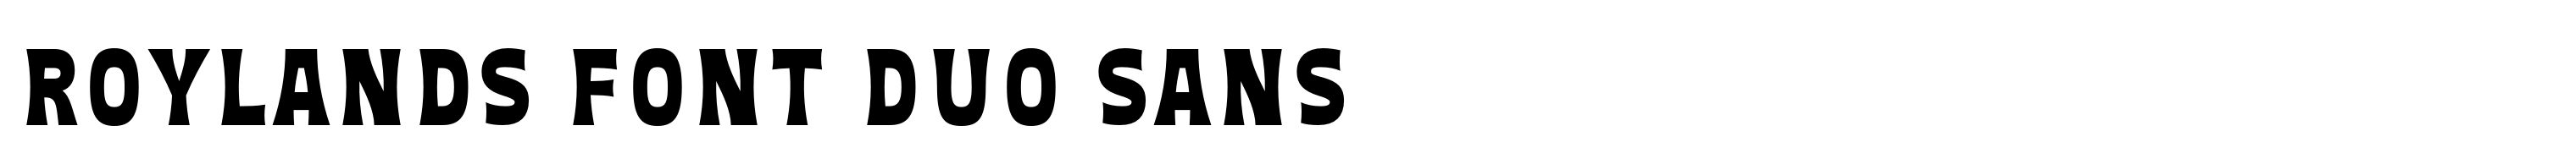 Roylands Font Duo Sans